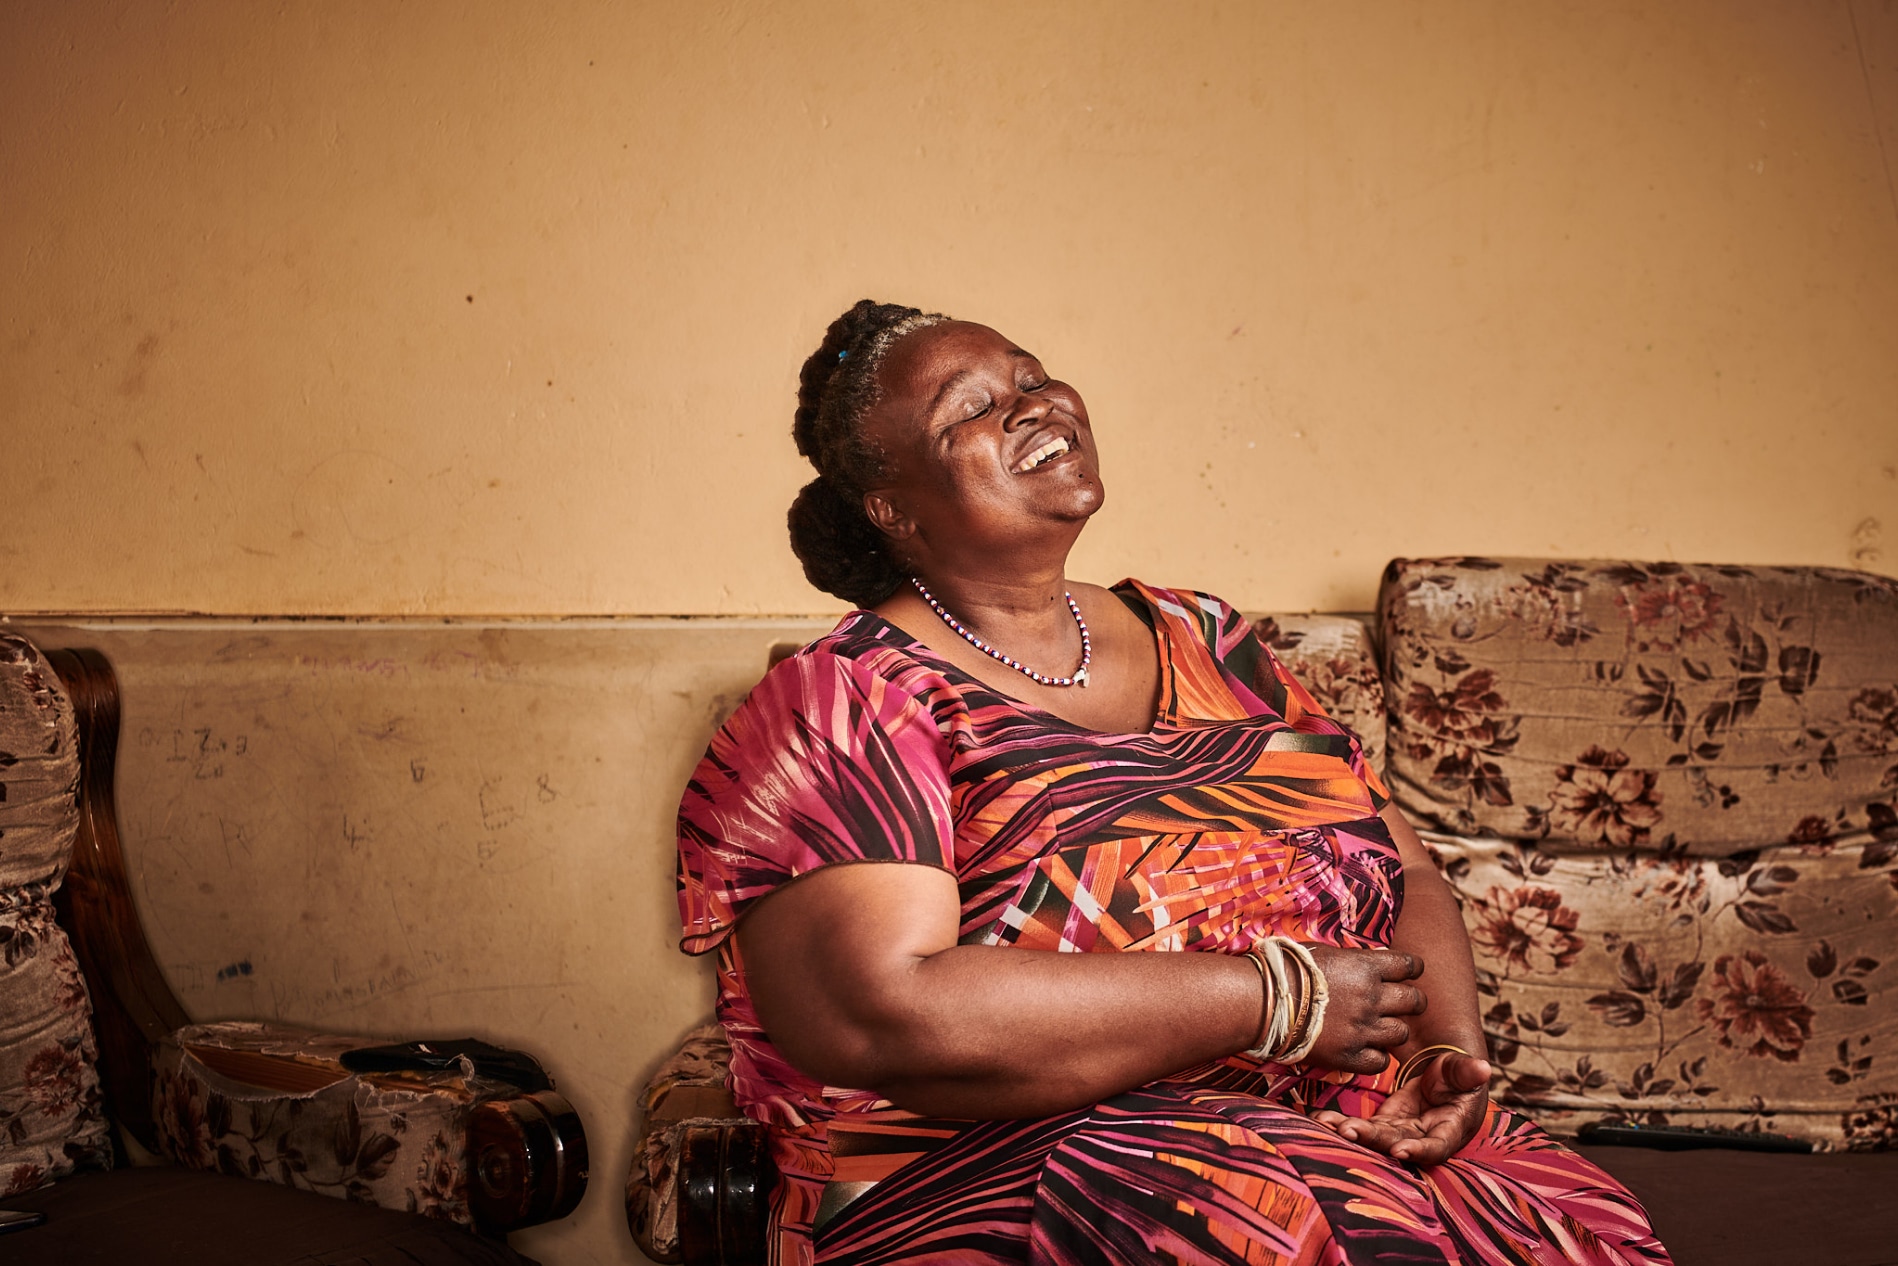 Pamela, 47, Kagiso - West Rand